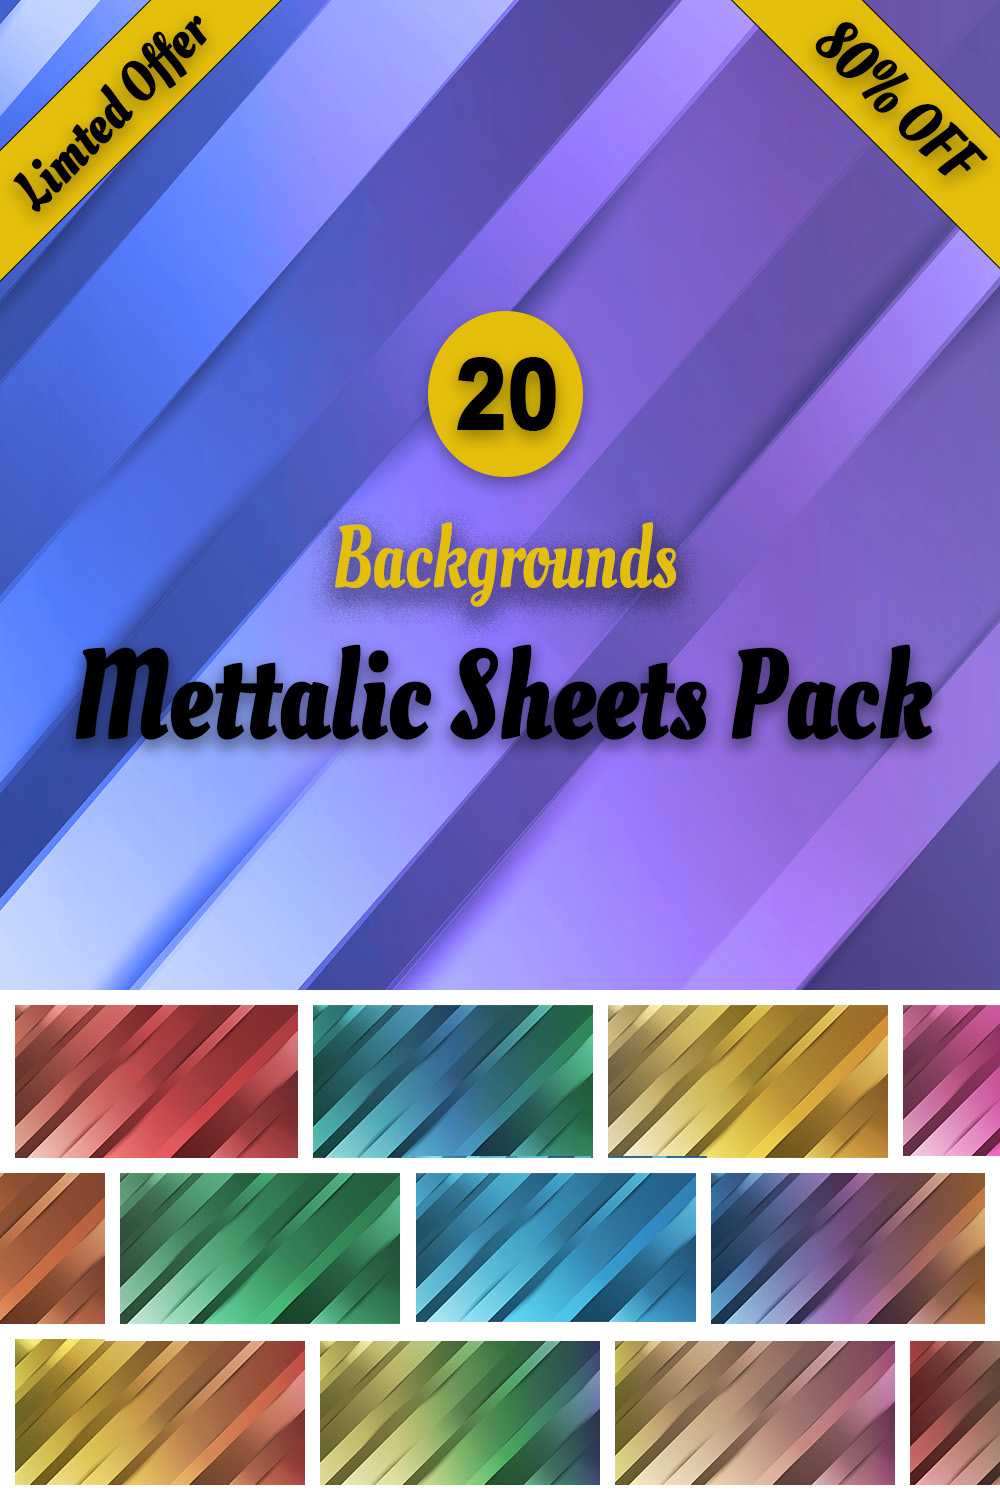 Metallic Sheets Background Pack pinterest image.